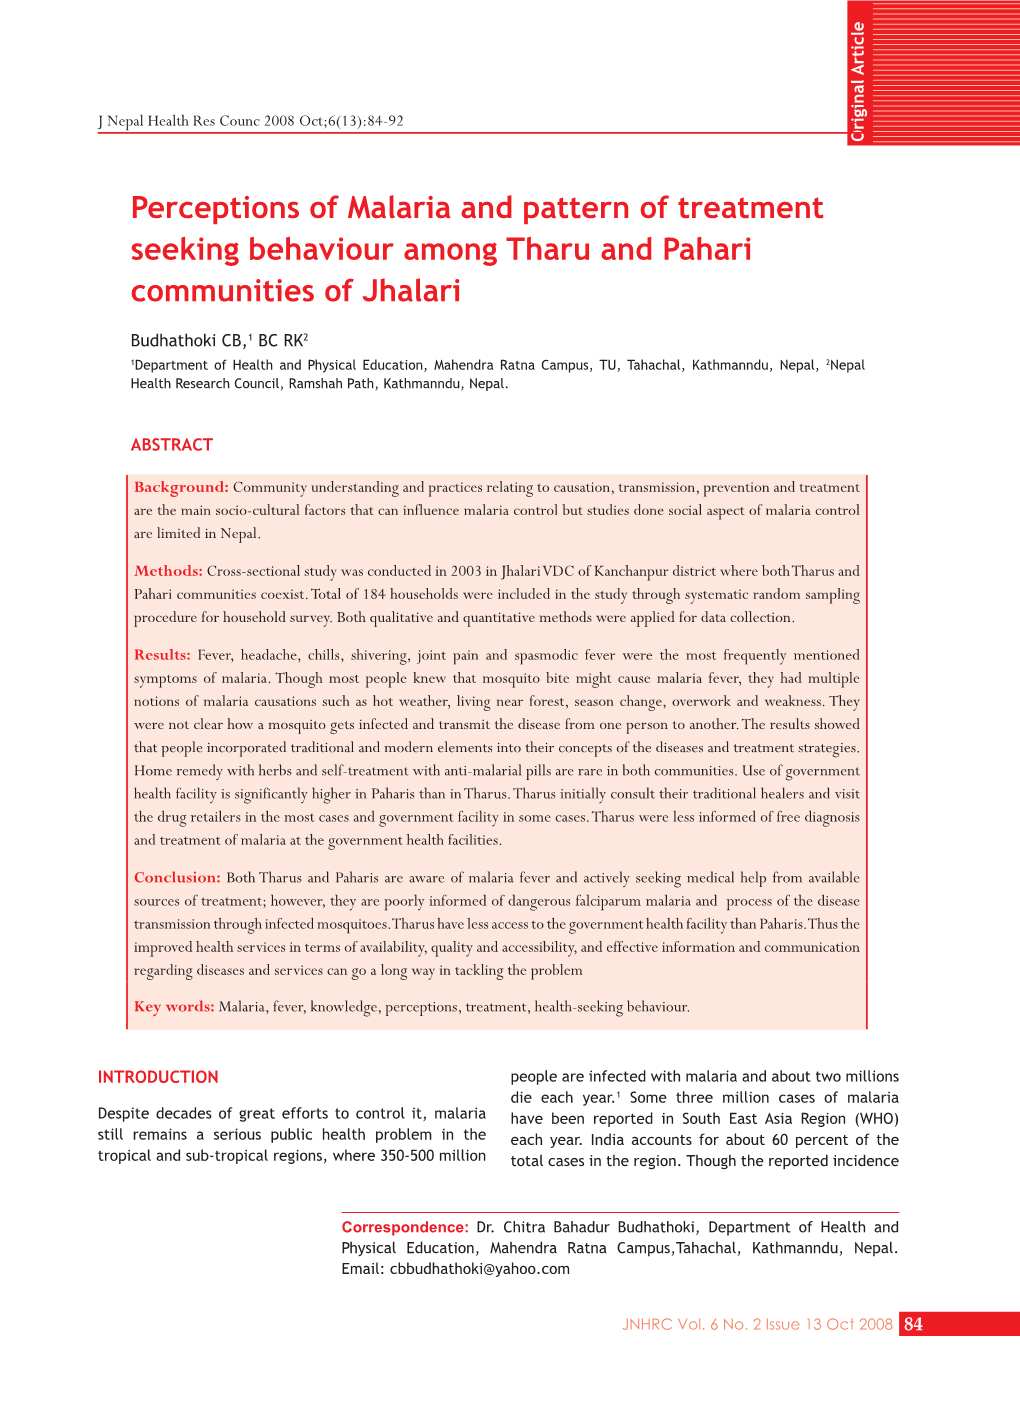 Perceptions of Malaria and Pattern of Treatment Seeking Behaviour Among Tharu and Pahari Communities of Jhalari